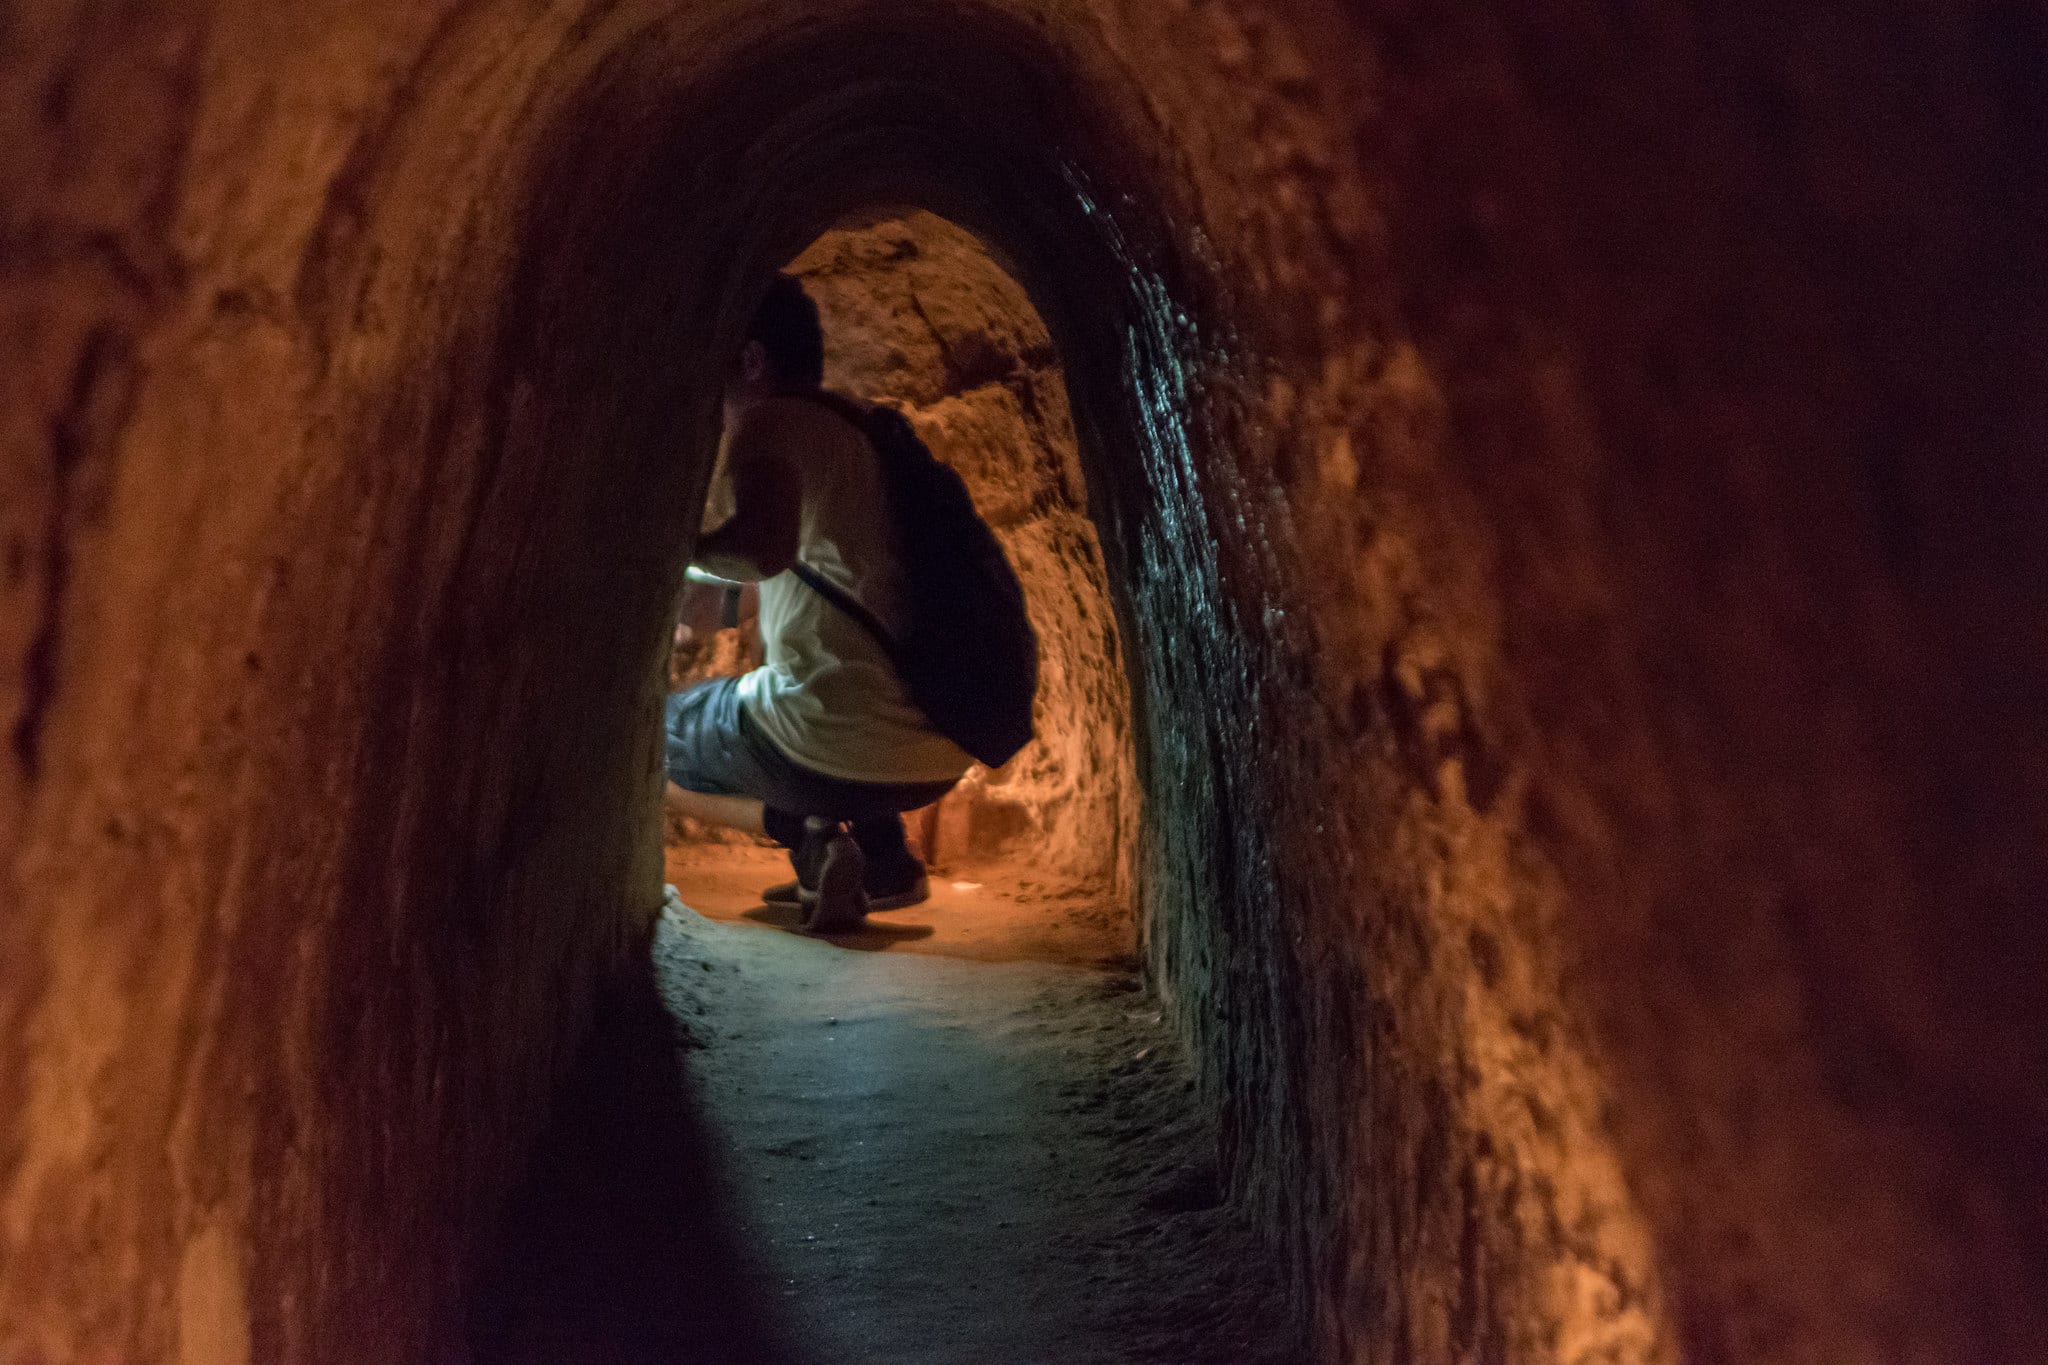 Cu Chi Tunnels – Ho Chi Minh City, Vietnam